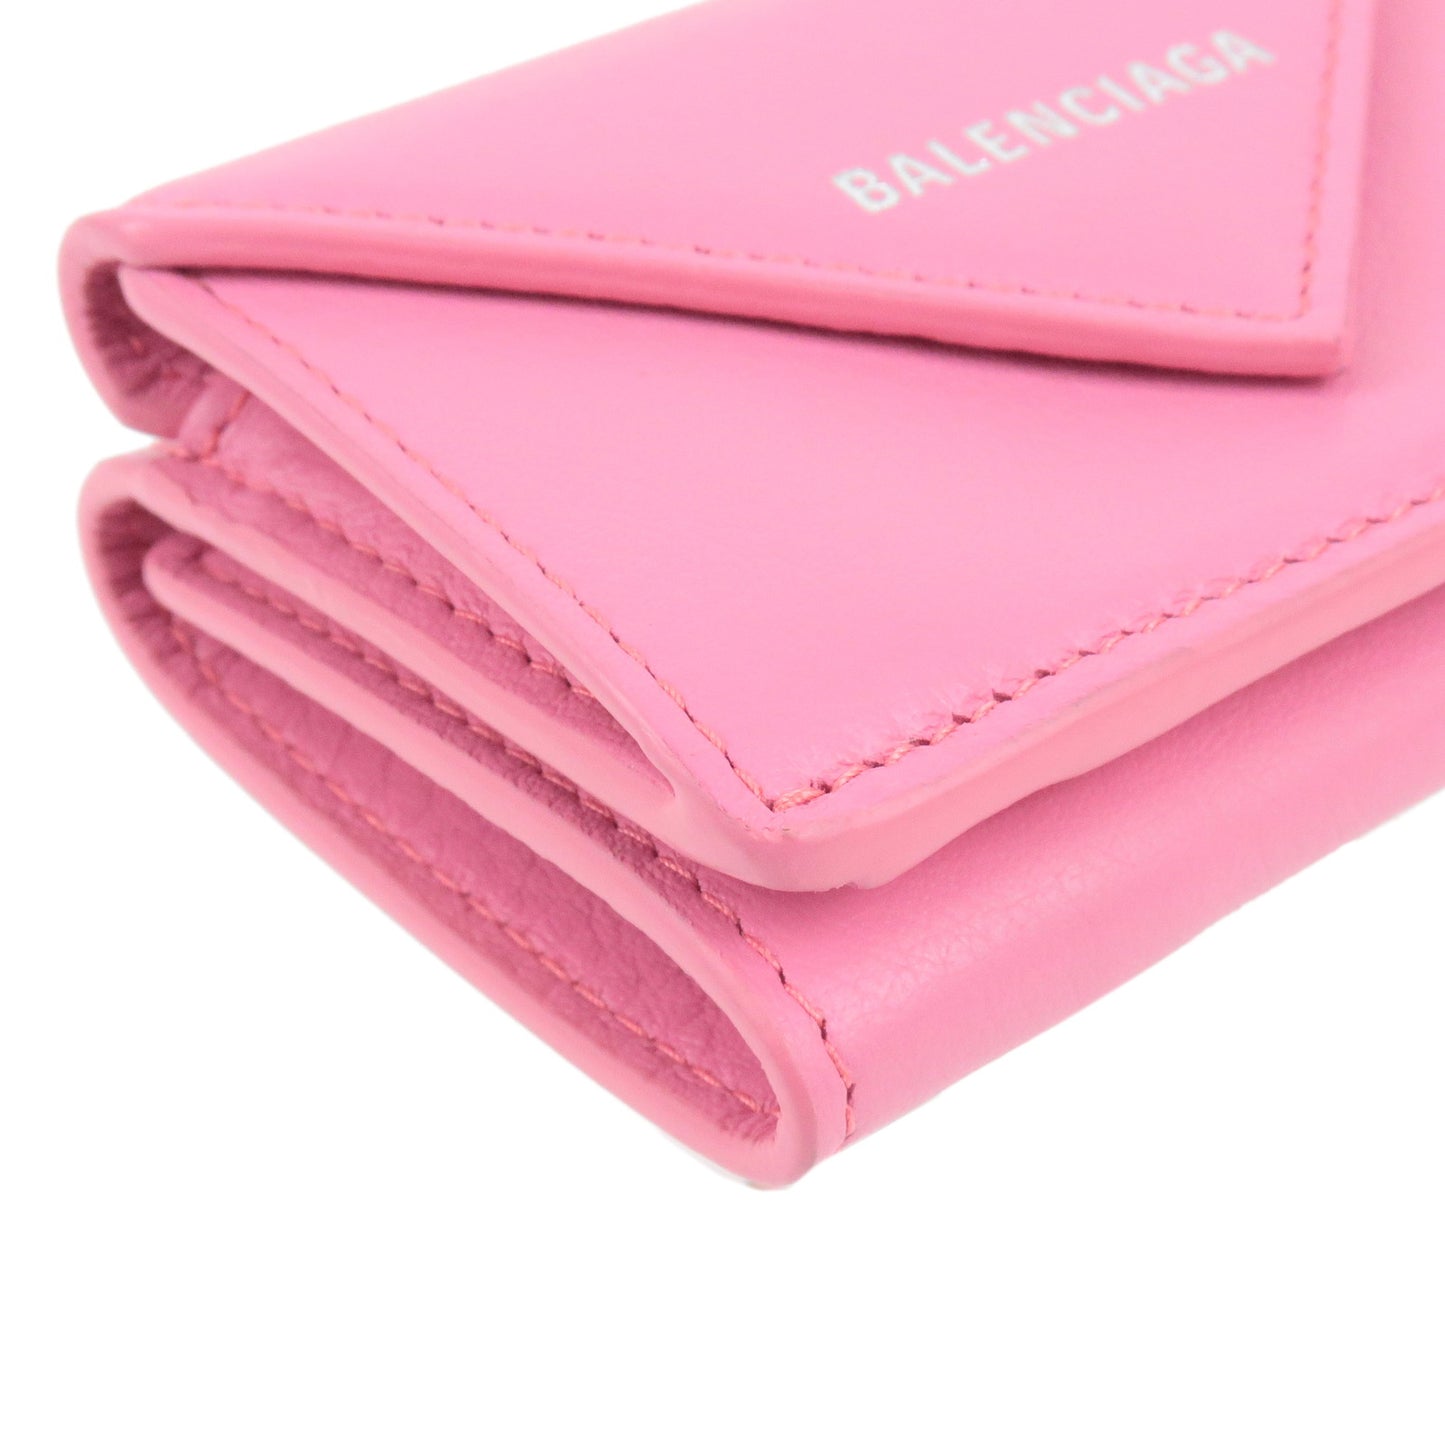 BALENCIAGA Leather Papier Mini Wallet Pink 391446